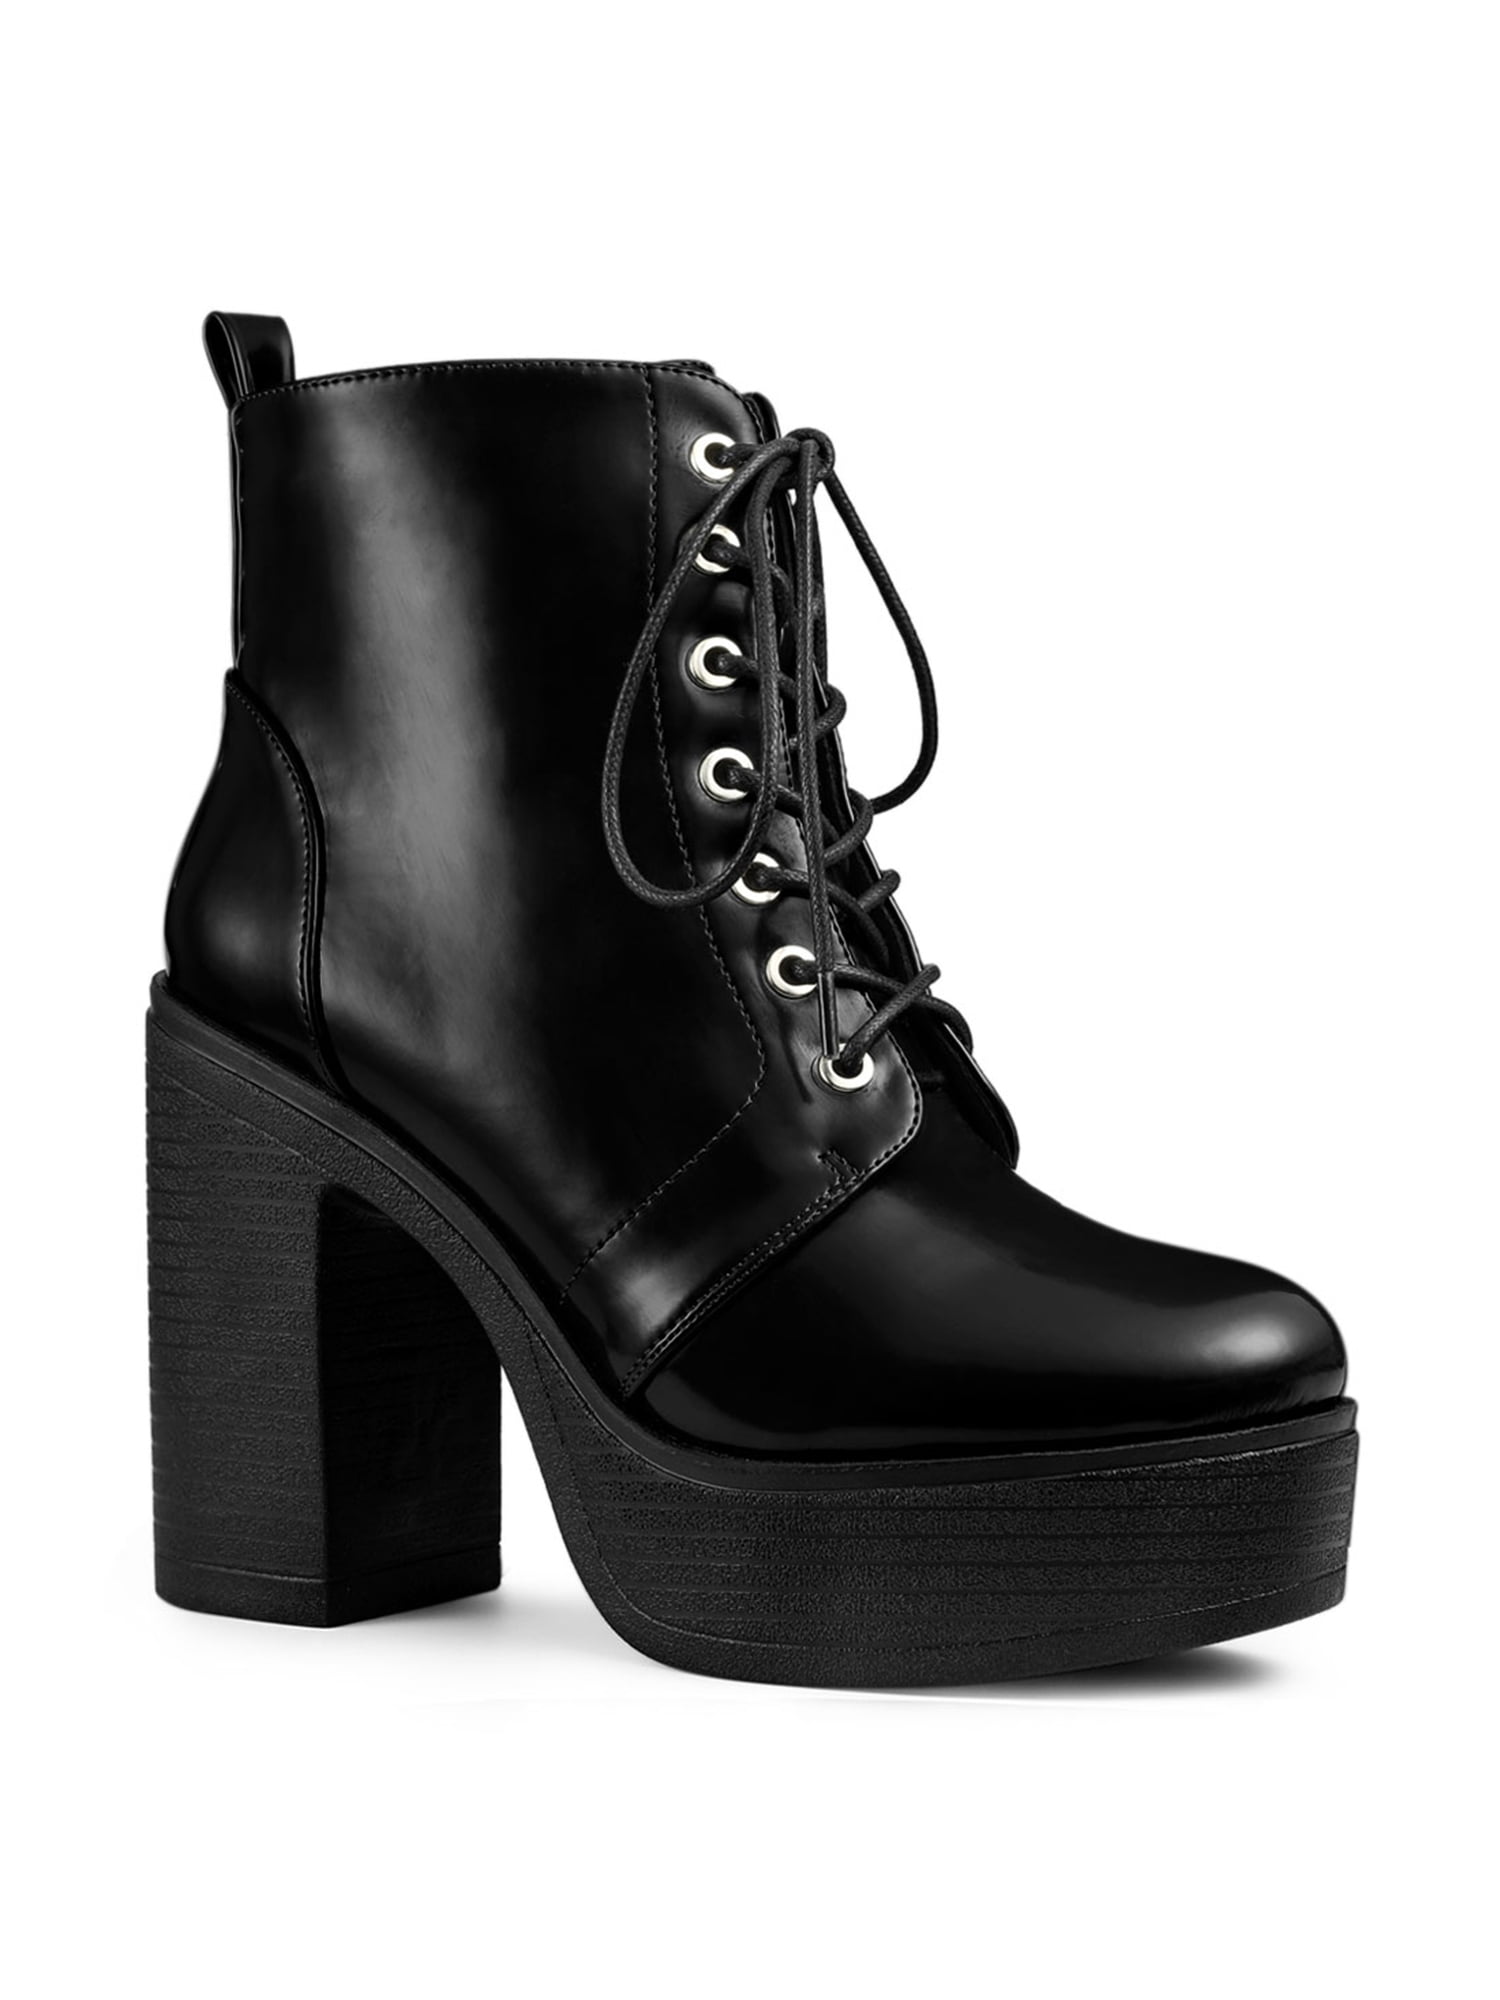 Soda Women High Heels Ankle Boots Combat Lug Sole Booties Brown Tan FUZZY-S  | eBay